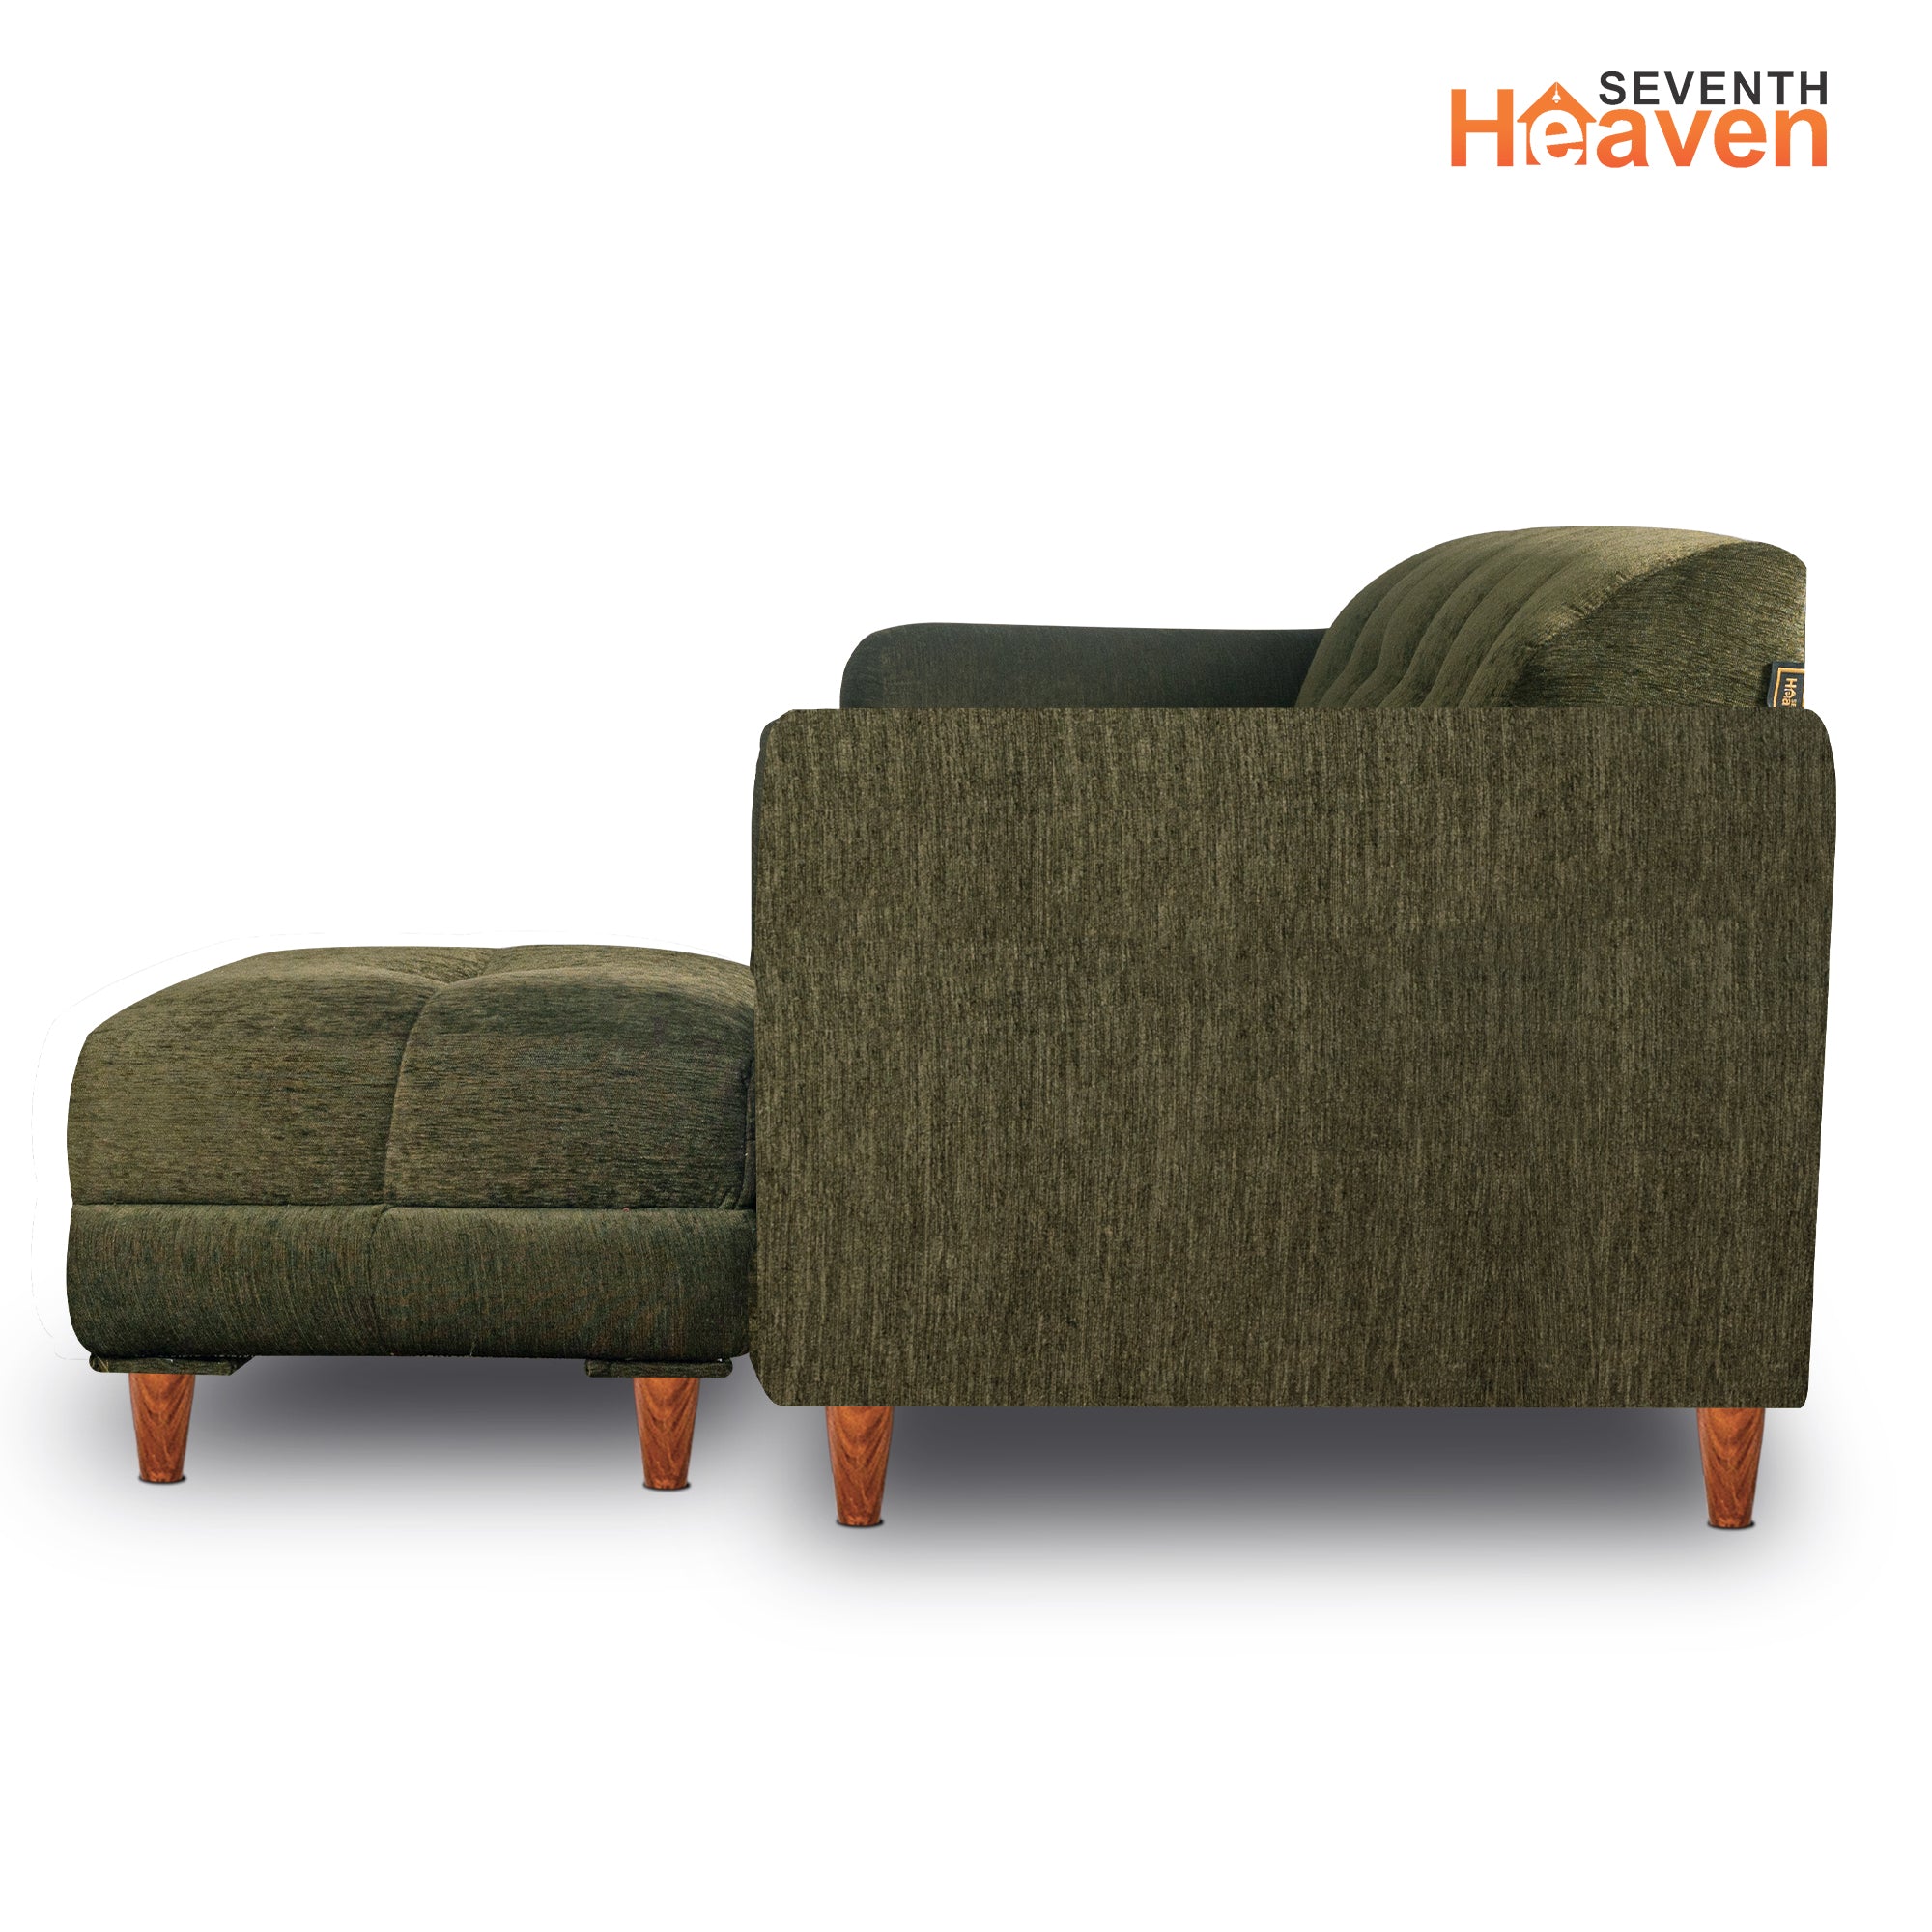 Seventh Heaven Milan 4 Seater Sofa with Ottoman, Chenille Molfino Fabric: 3 Year Warranty Fabric 4 Seater Sofa  (Finish Color - Green, DIY(Do-It-Yourself))